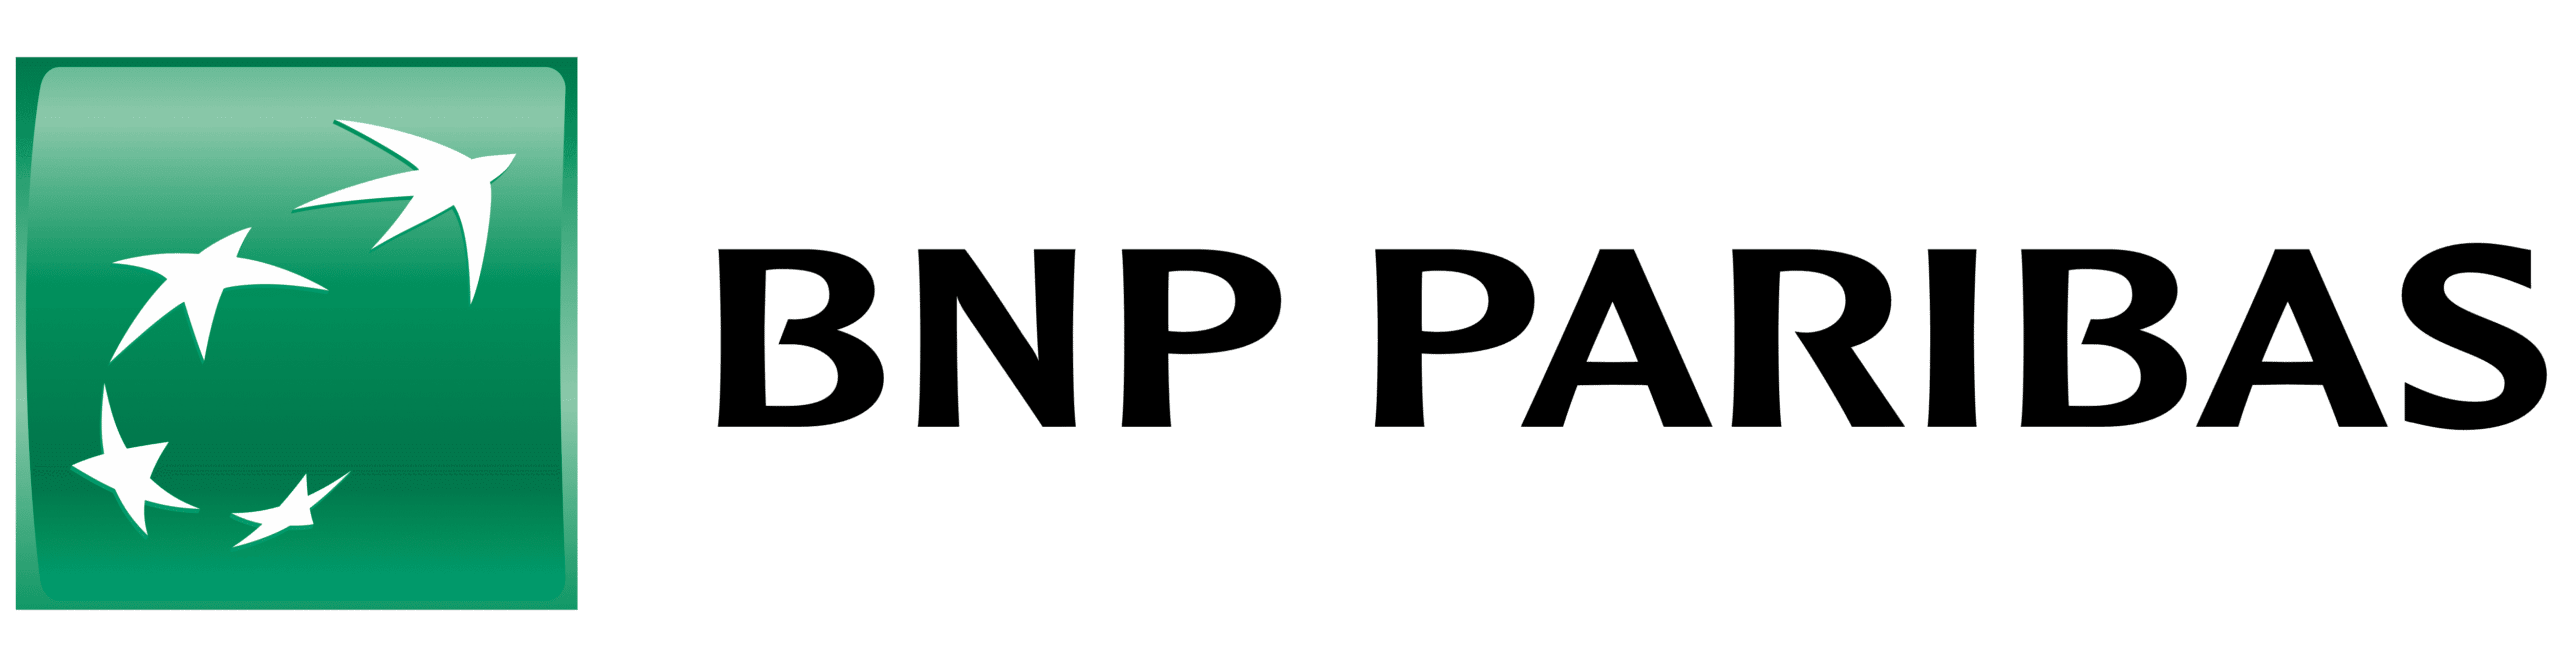 Avis – Que penser de BNP Paribas